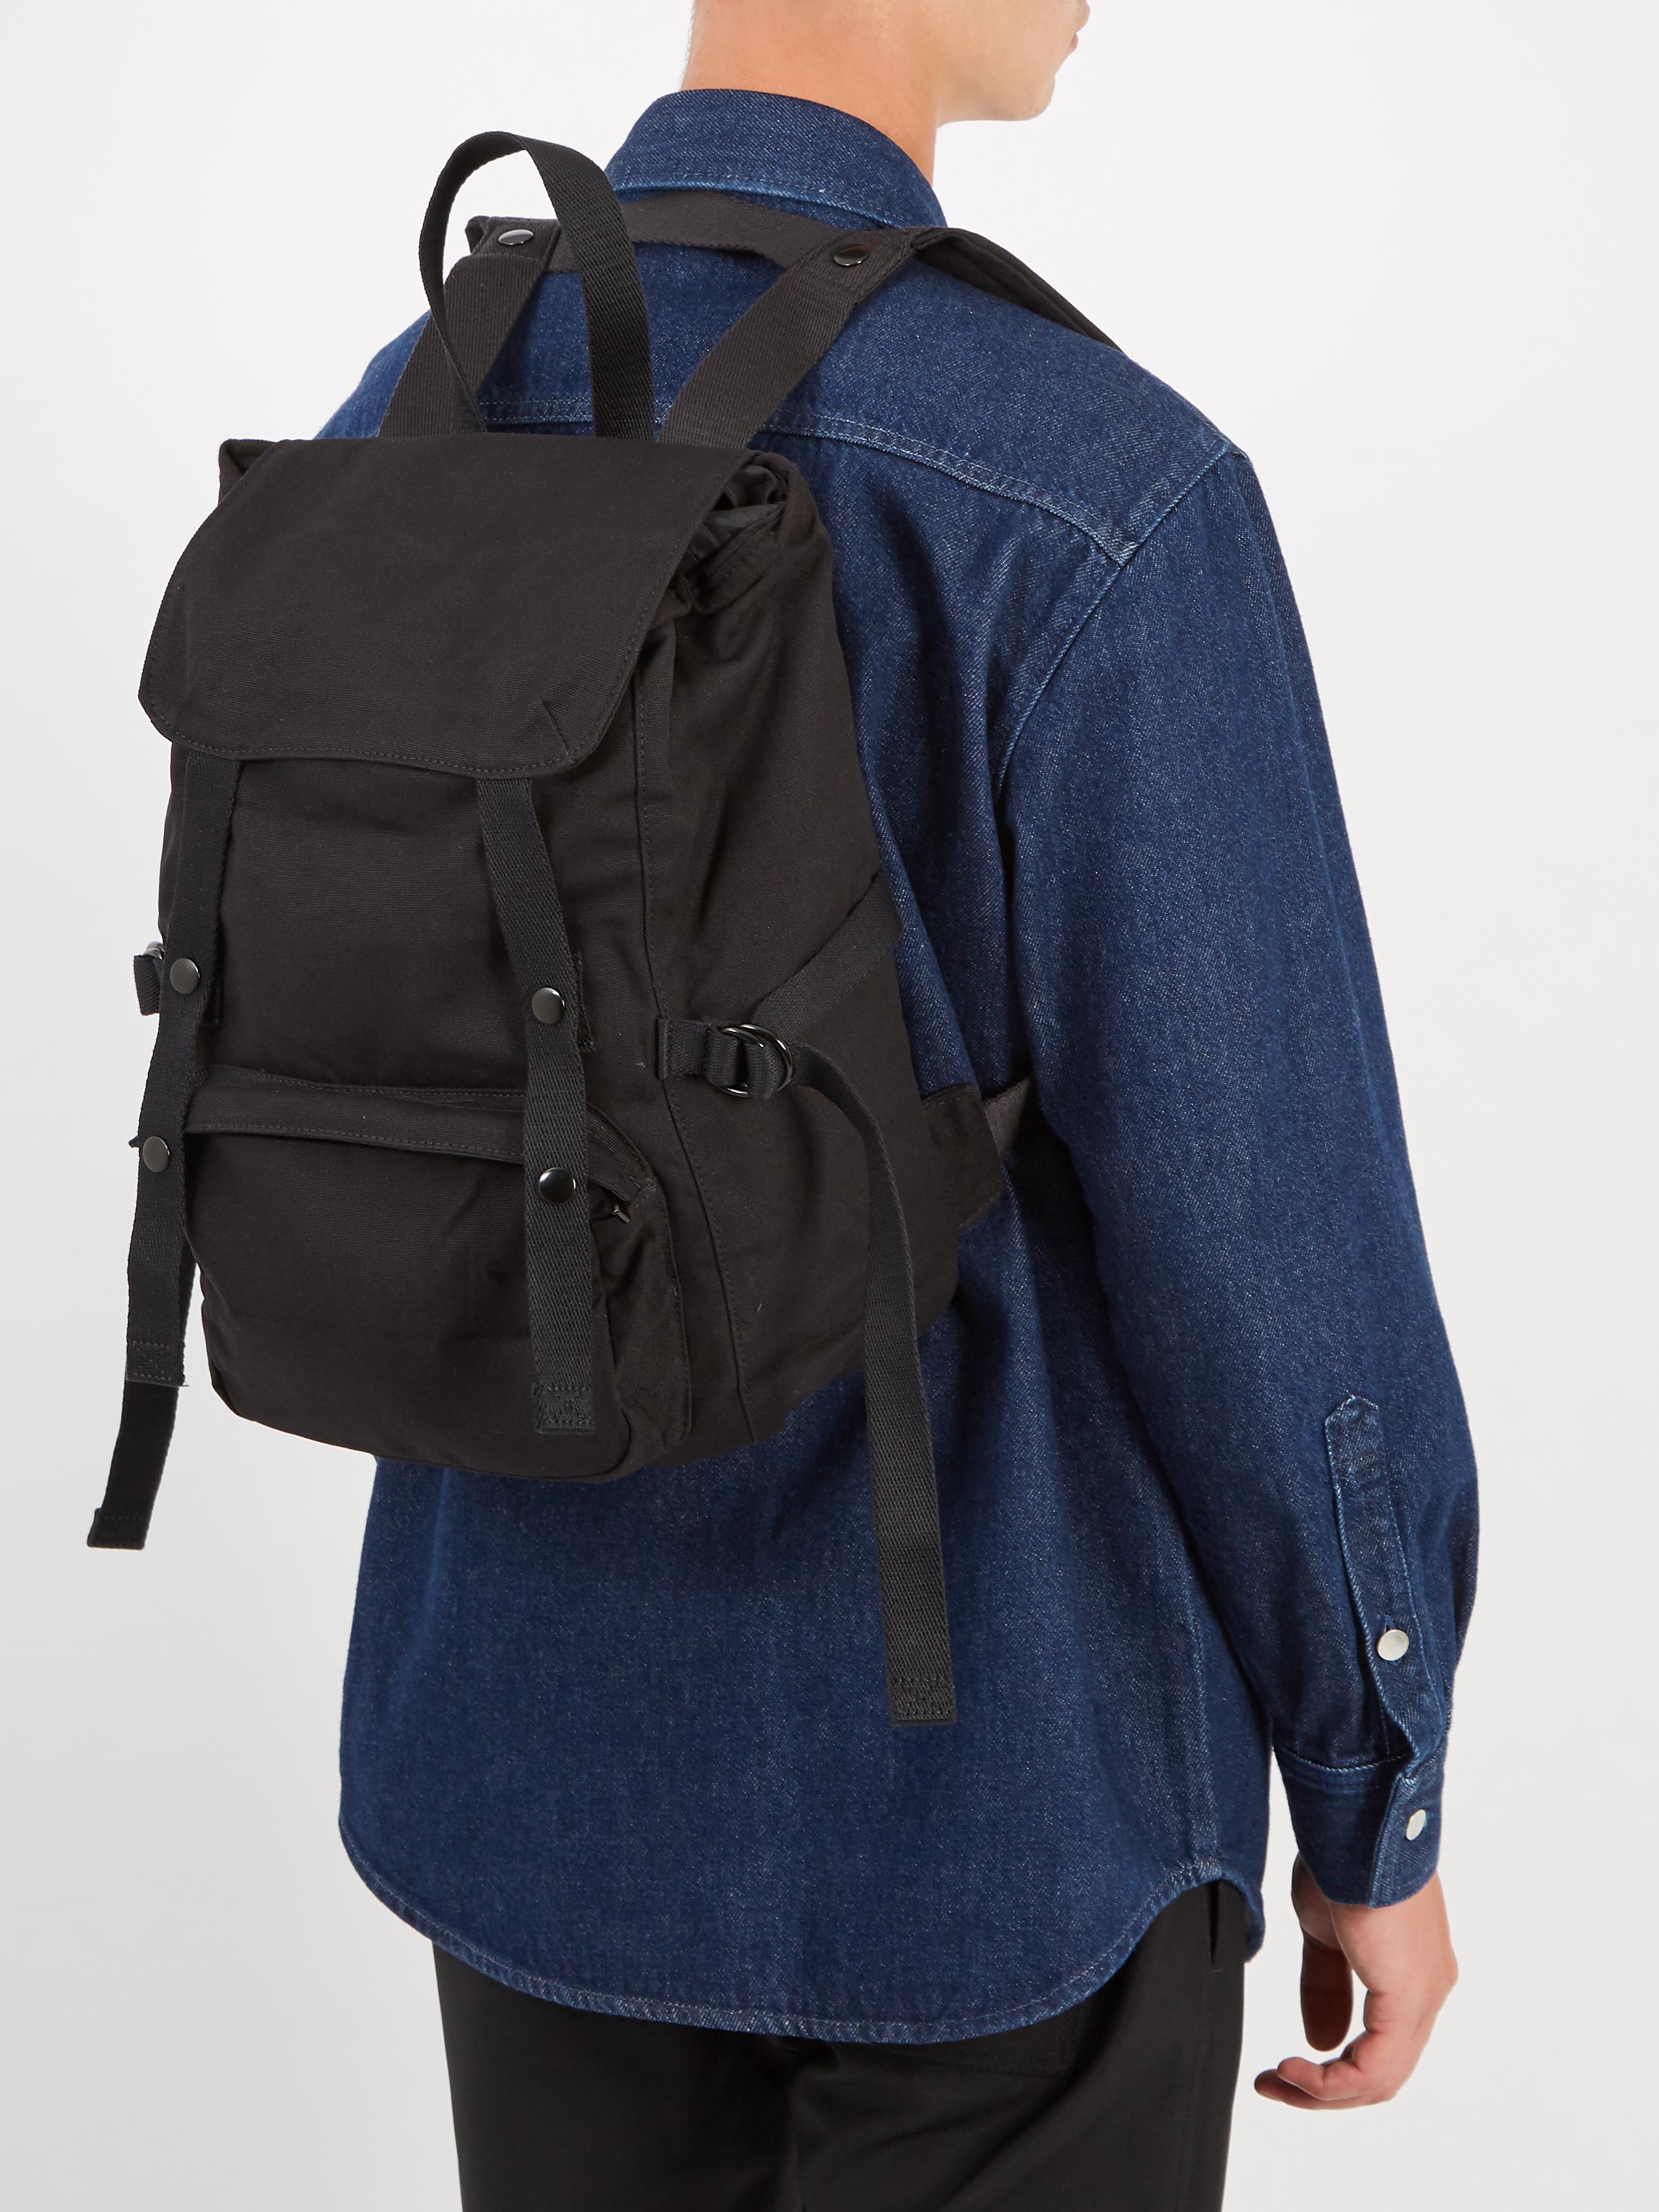 Raf Simons X Eastpak Canvas Backpack in Black for Men | Lyst